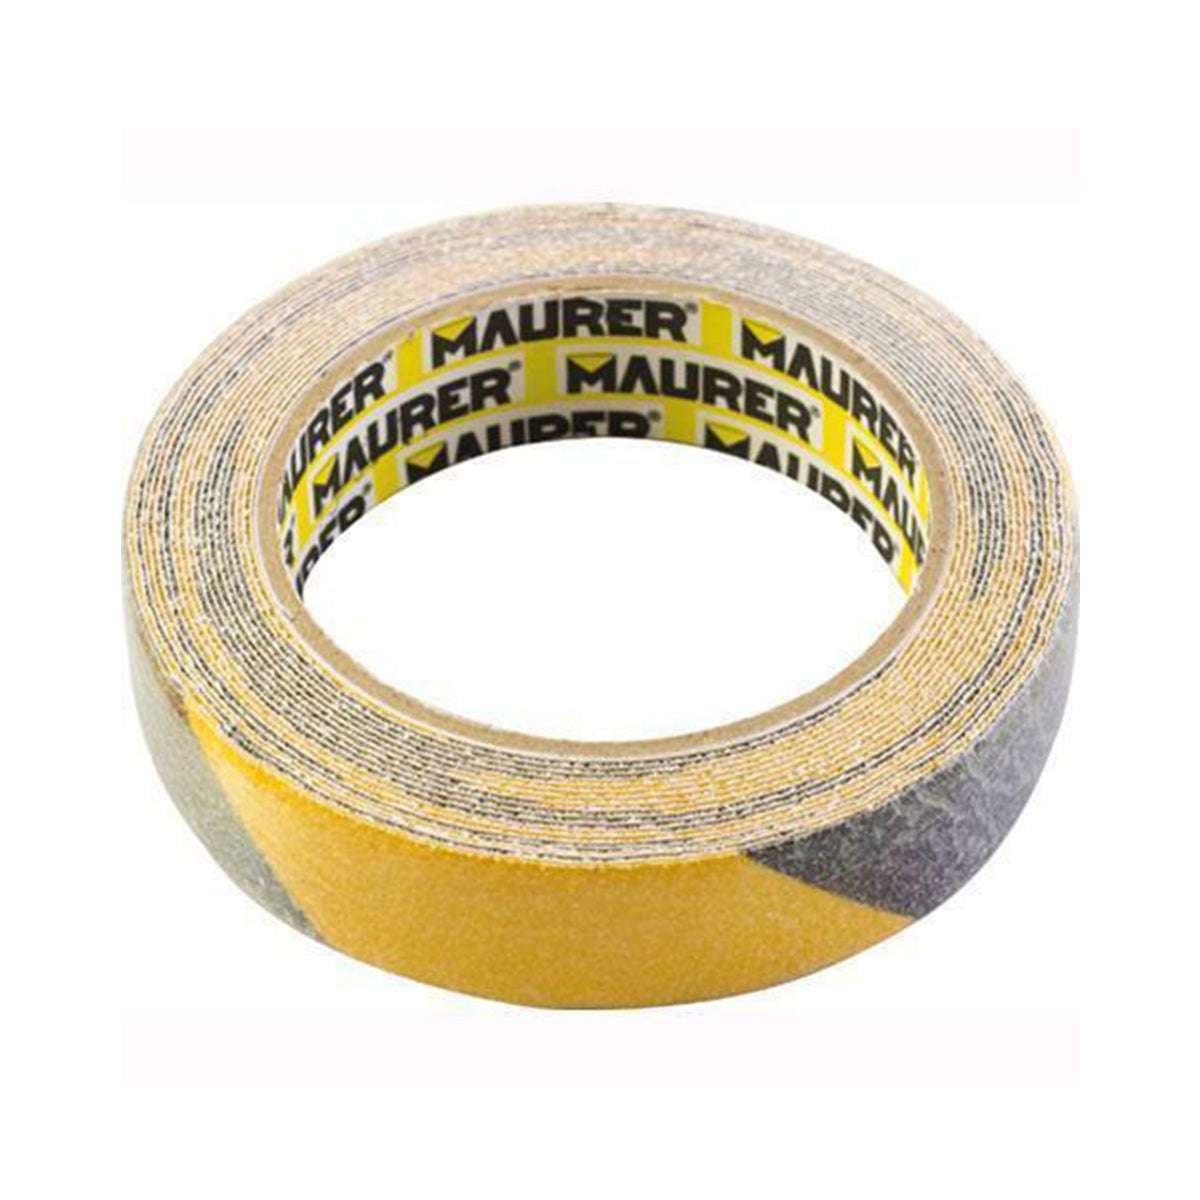 Anti-skid tape Yellow/Black 25mm wide 5 meters long - Maurer 99396